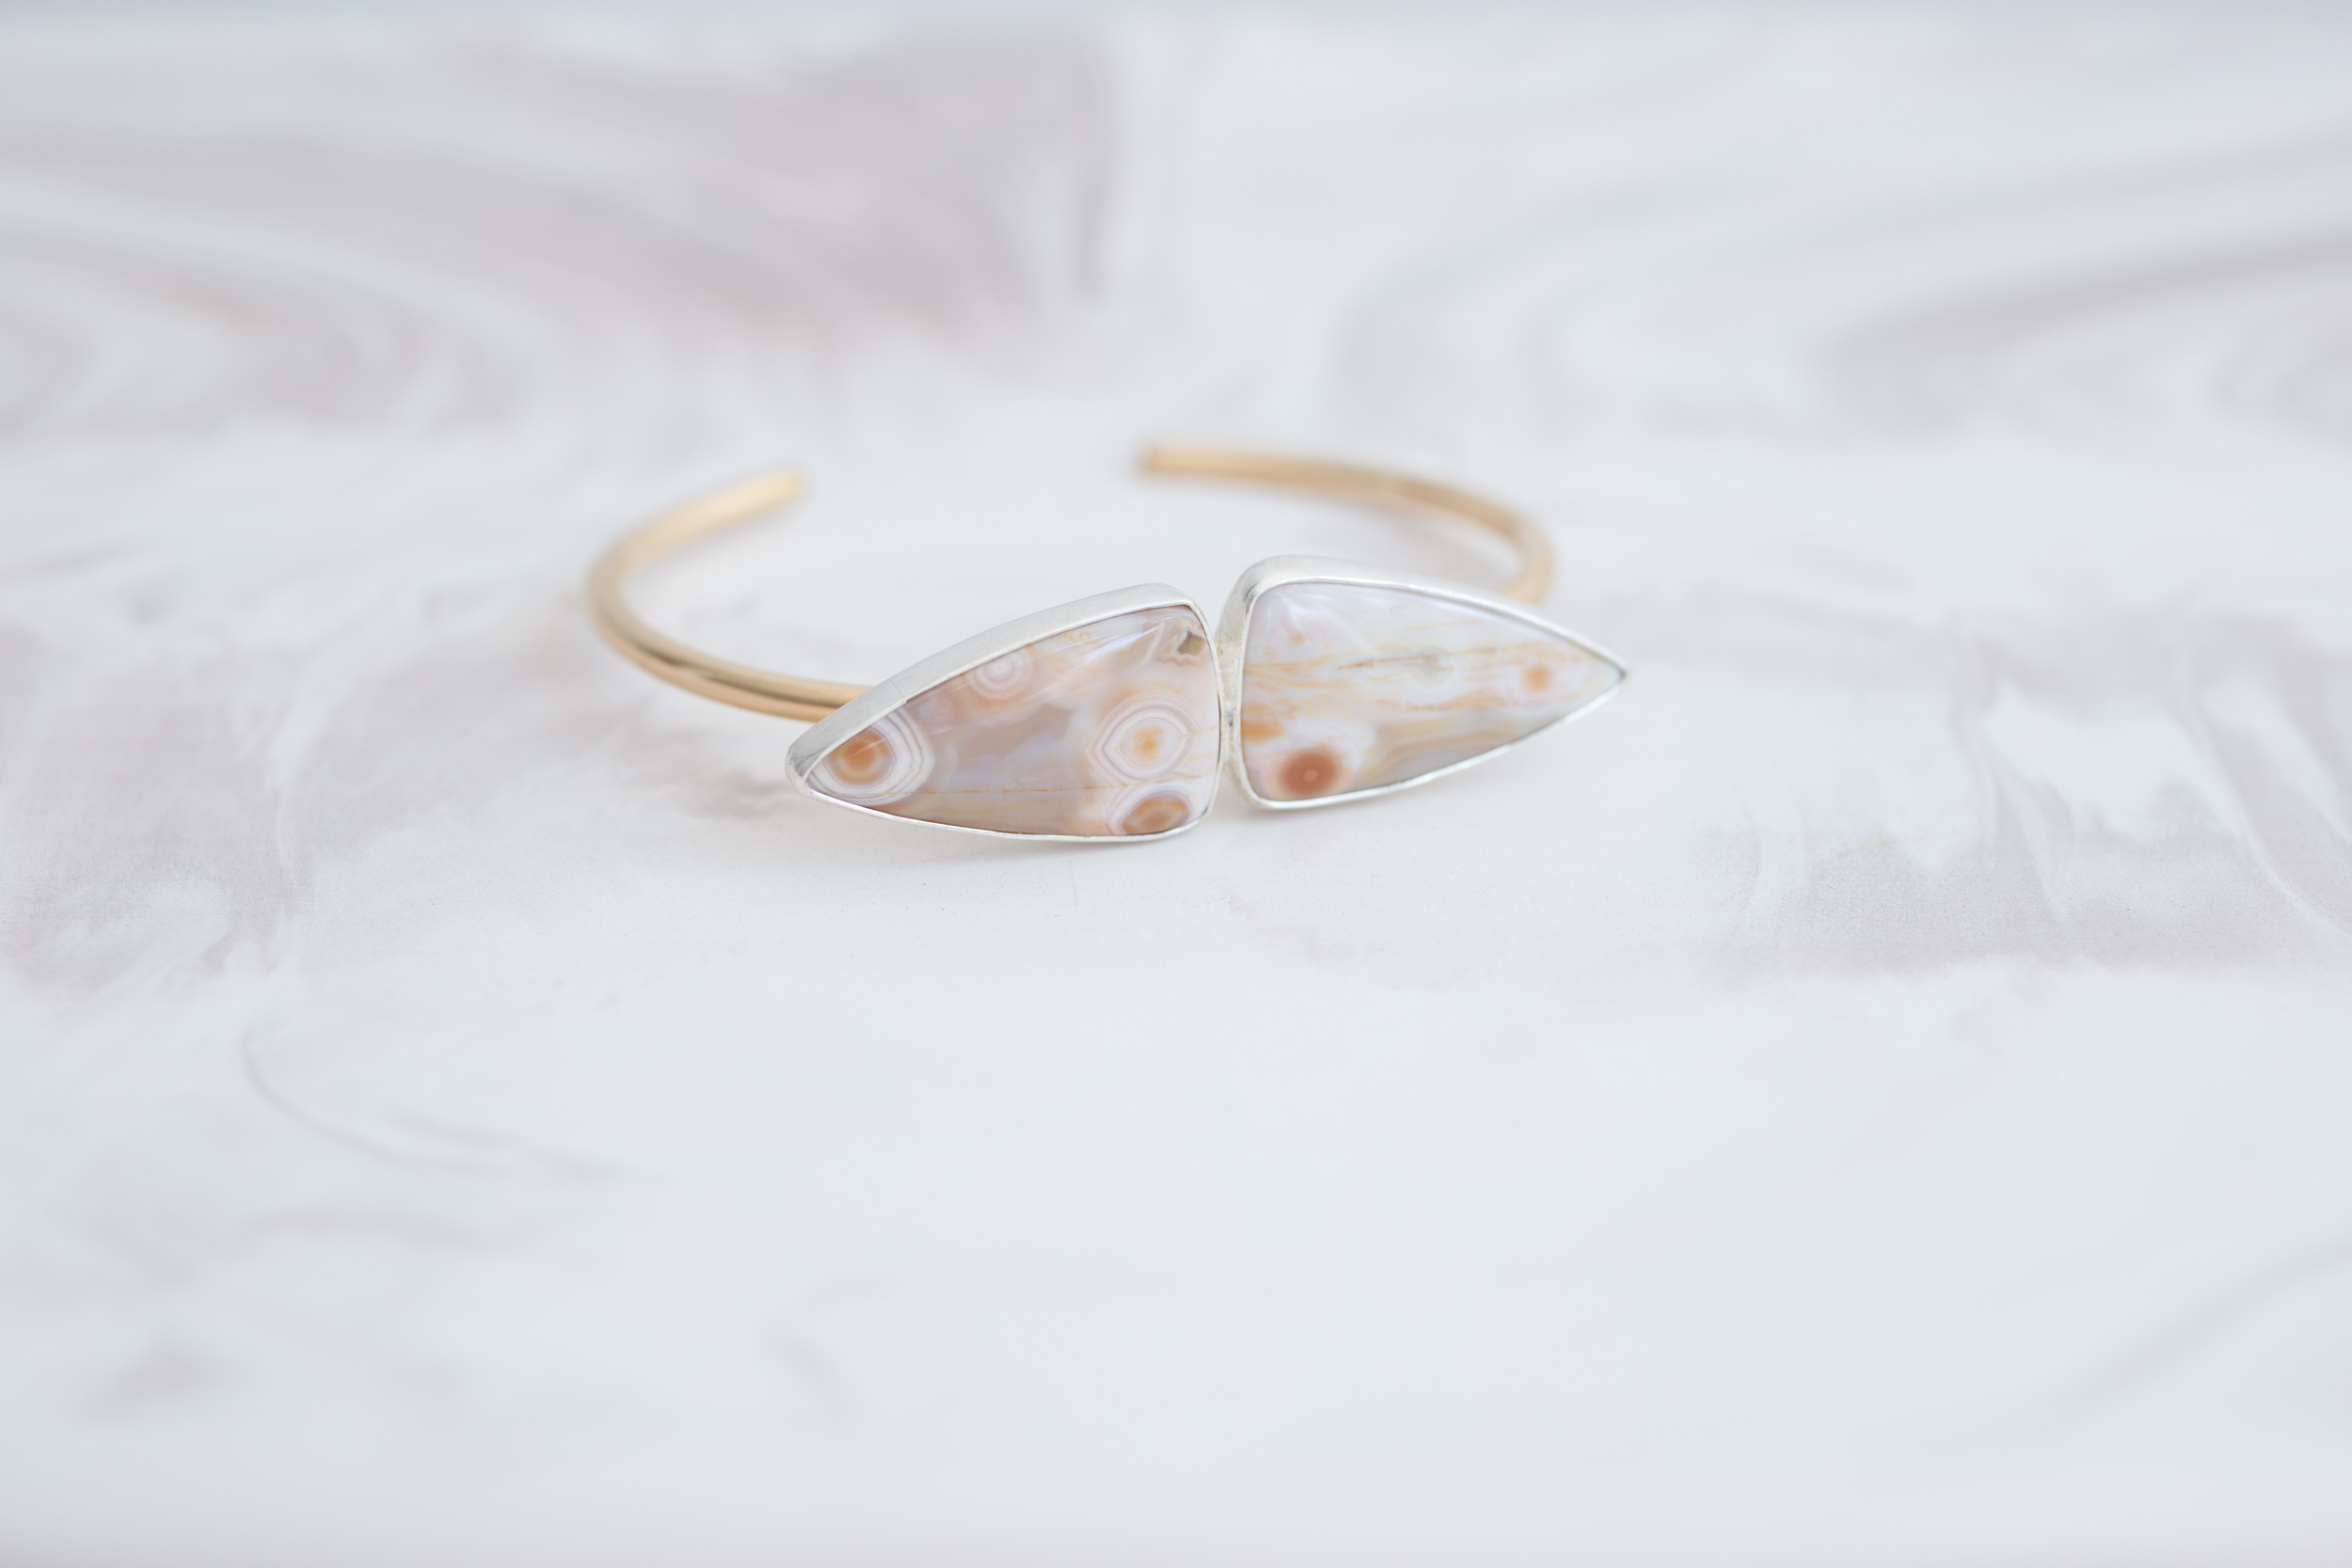 eurasia Handmade Natural Oval Shape Ocean Jasper Gemstone Silver Plated Cuff Bracelet 